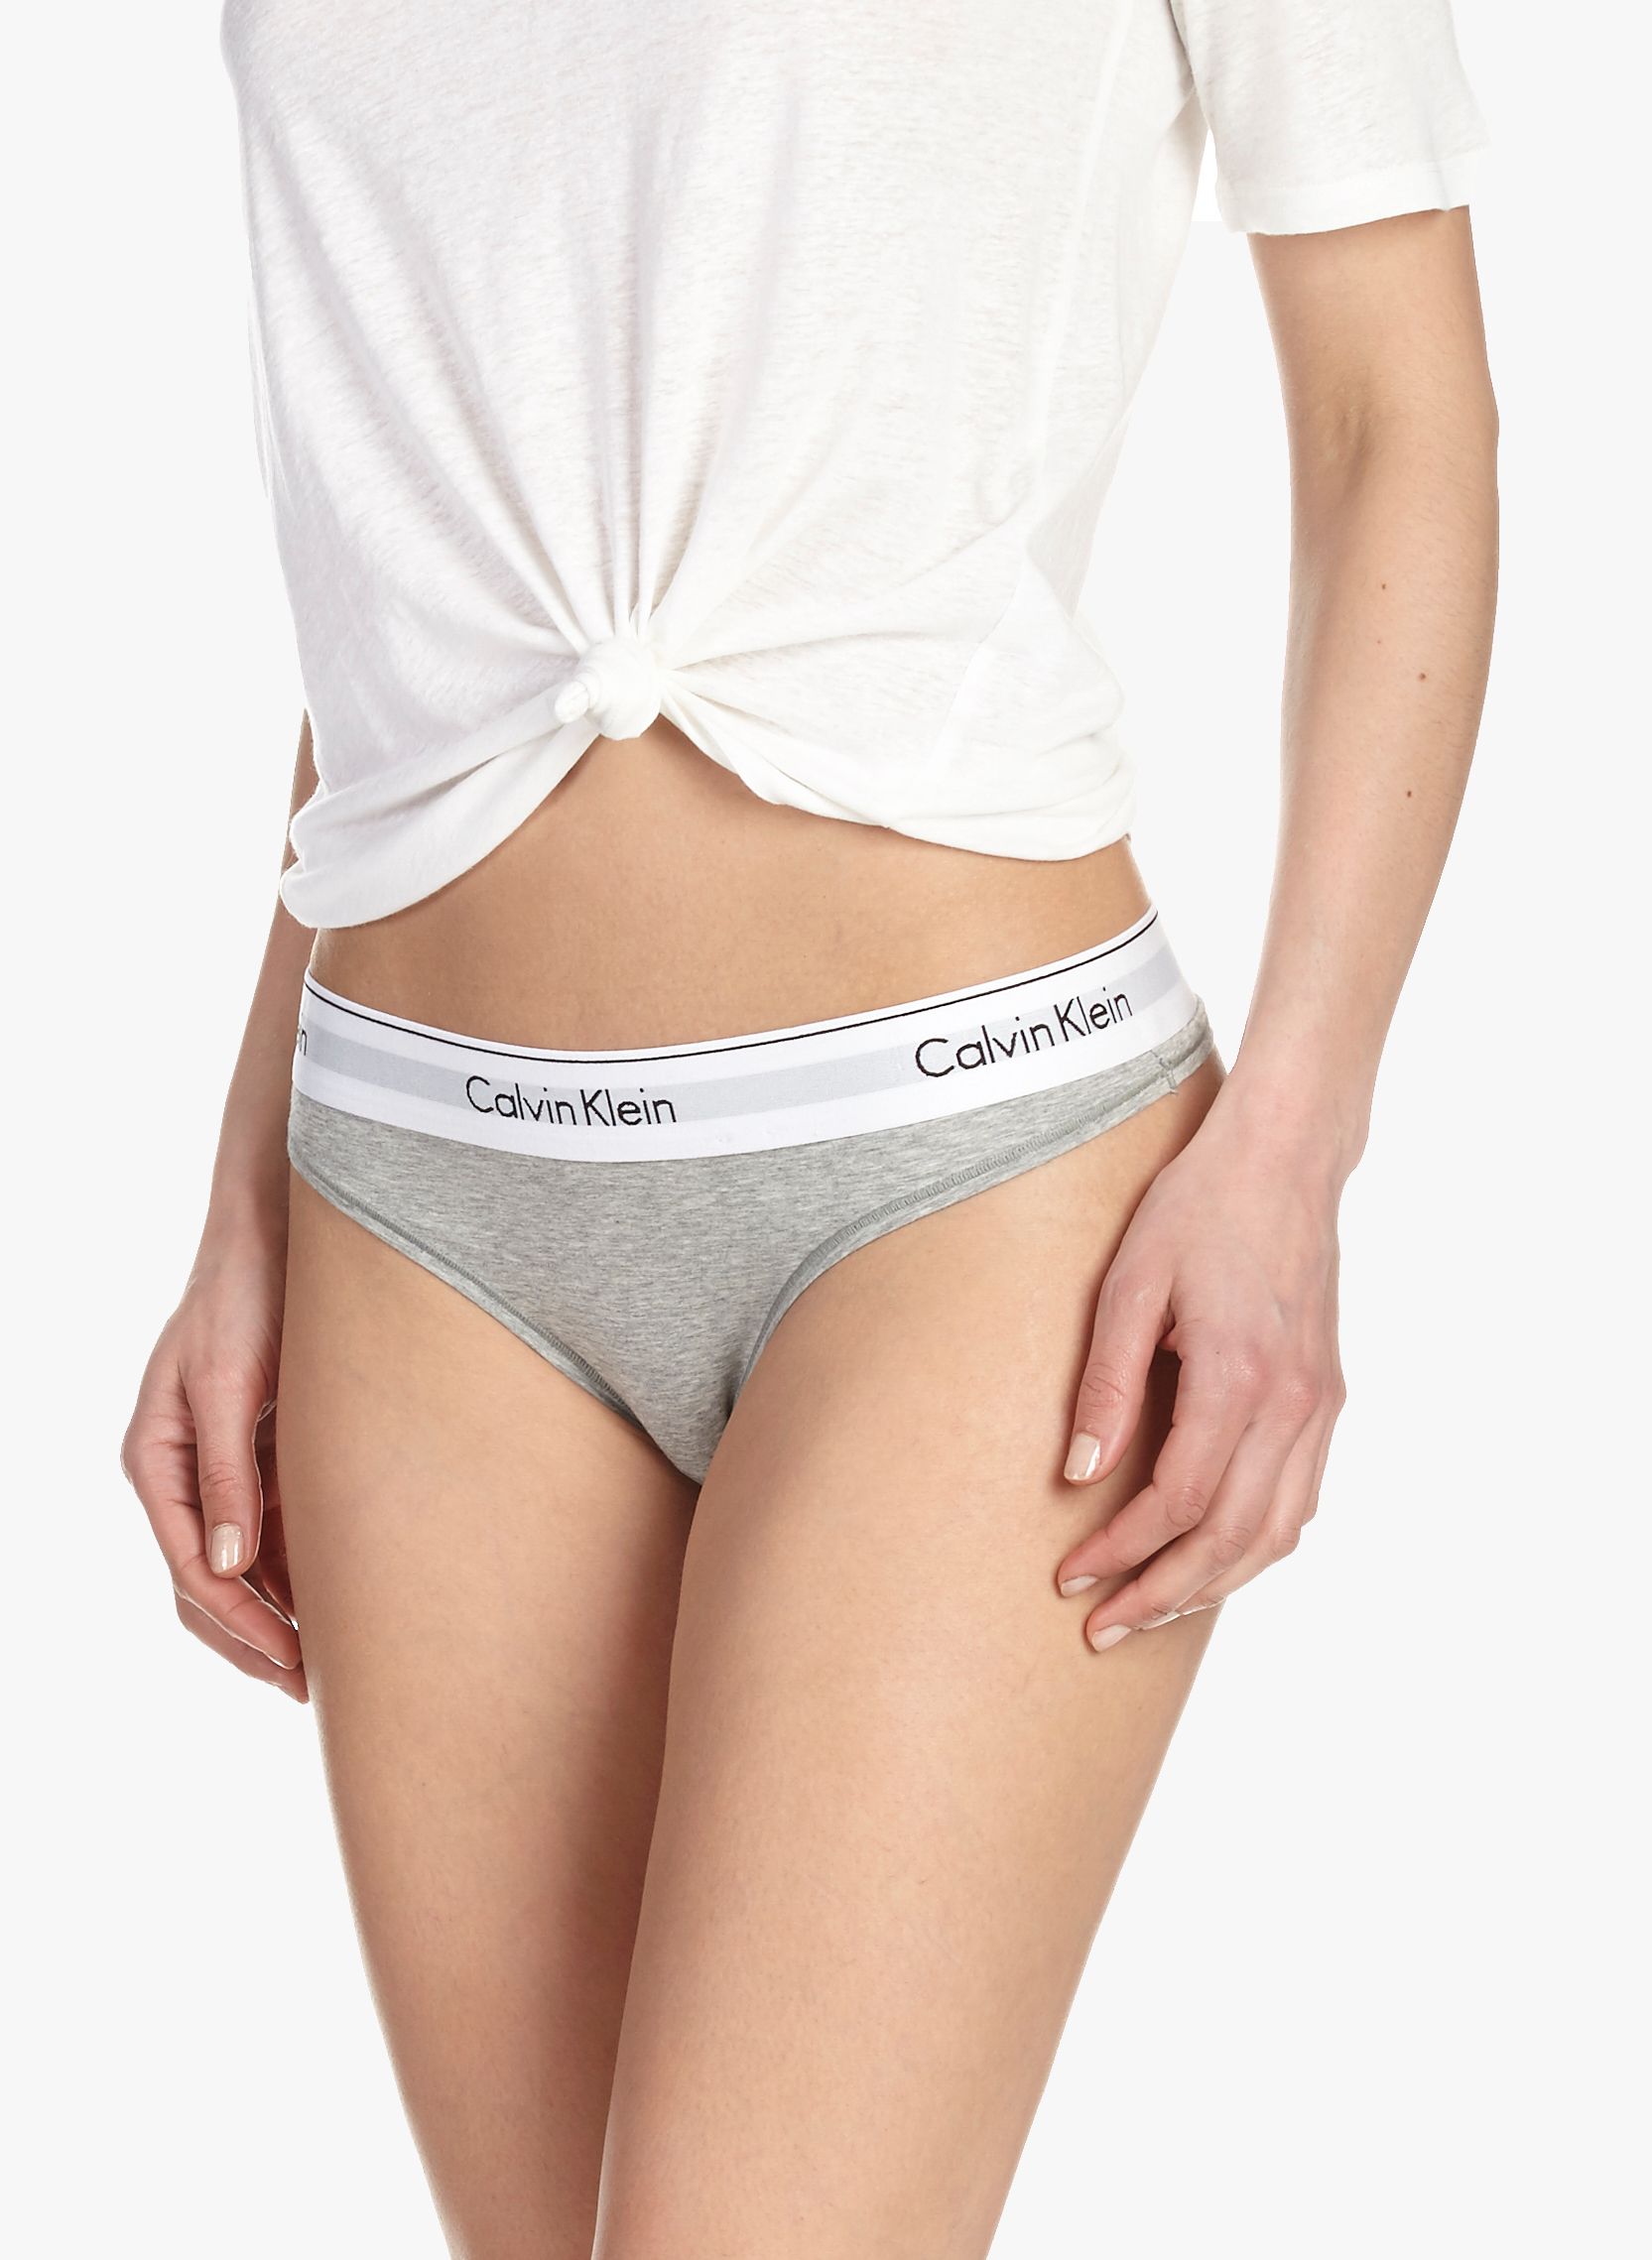 https://media-cdn.placedestendances.com/en/calvin-klein-underwear-cotton-string-grey/image/74/7/2264747.jpg